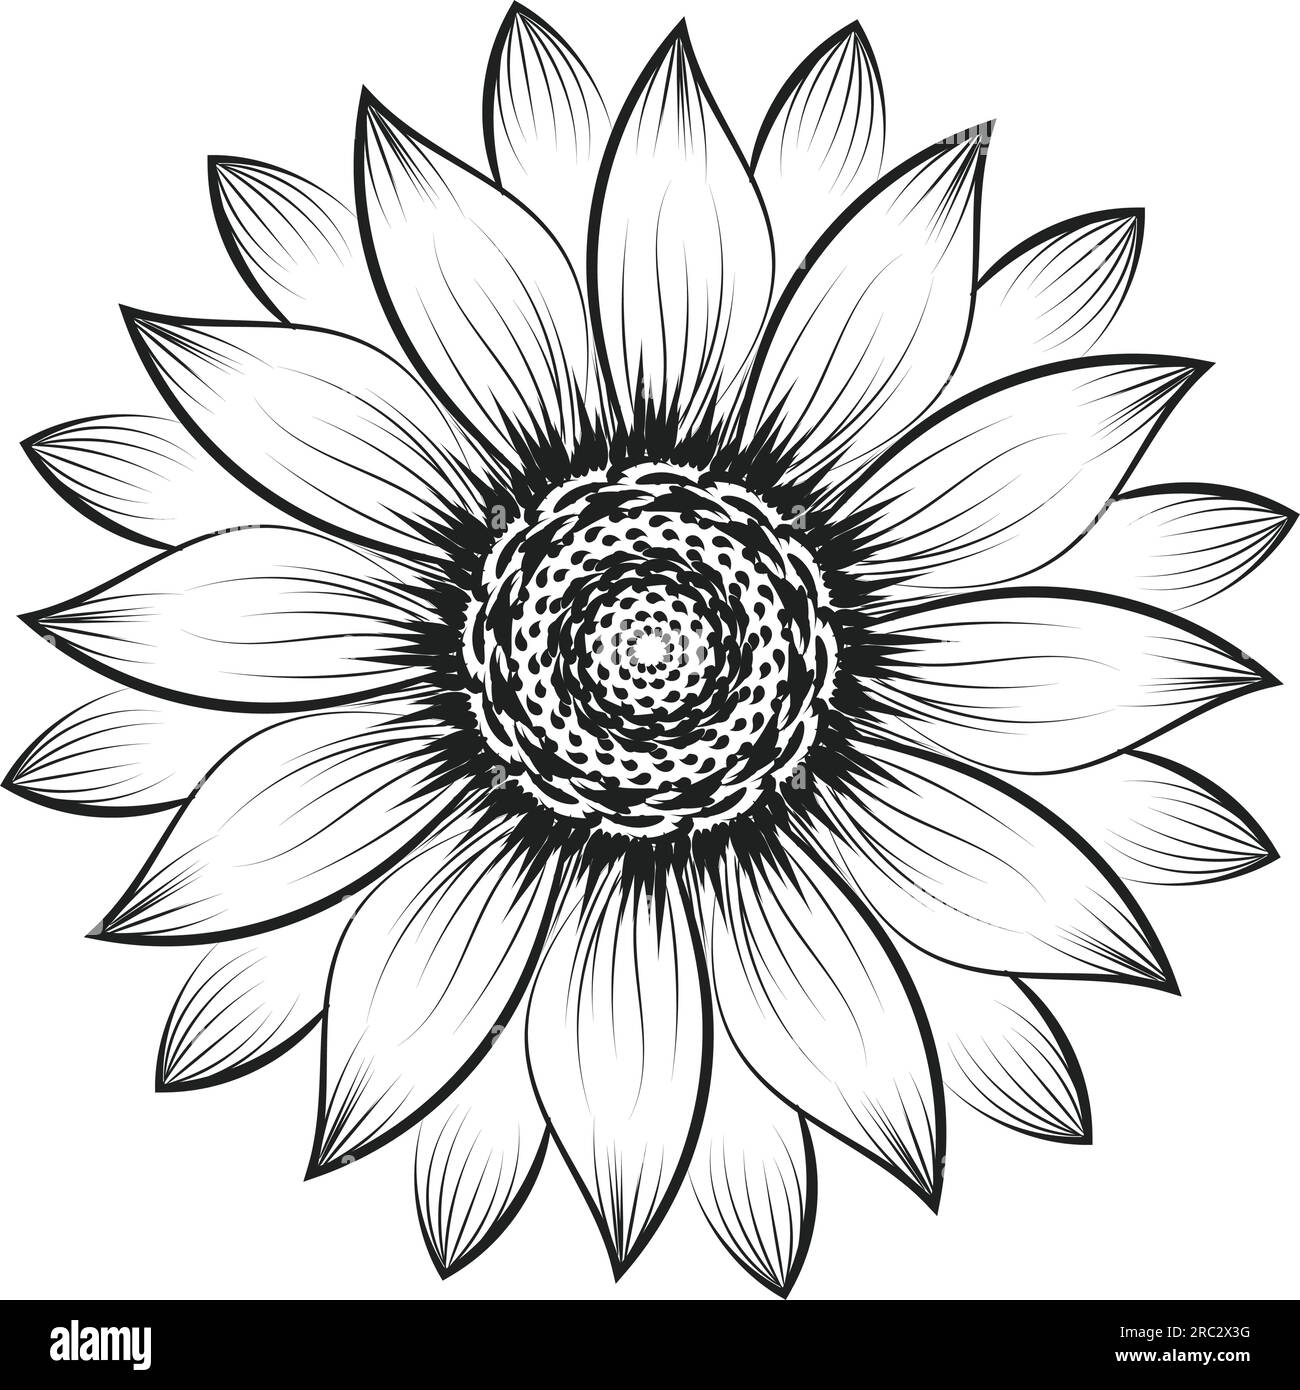 Sunflower Outline, Sunflower Line Art, Floral Line Drawing, black and ...